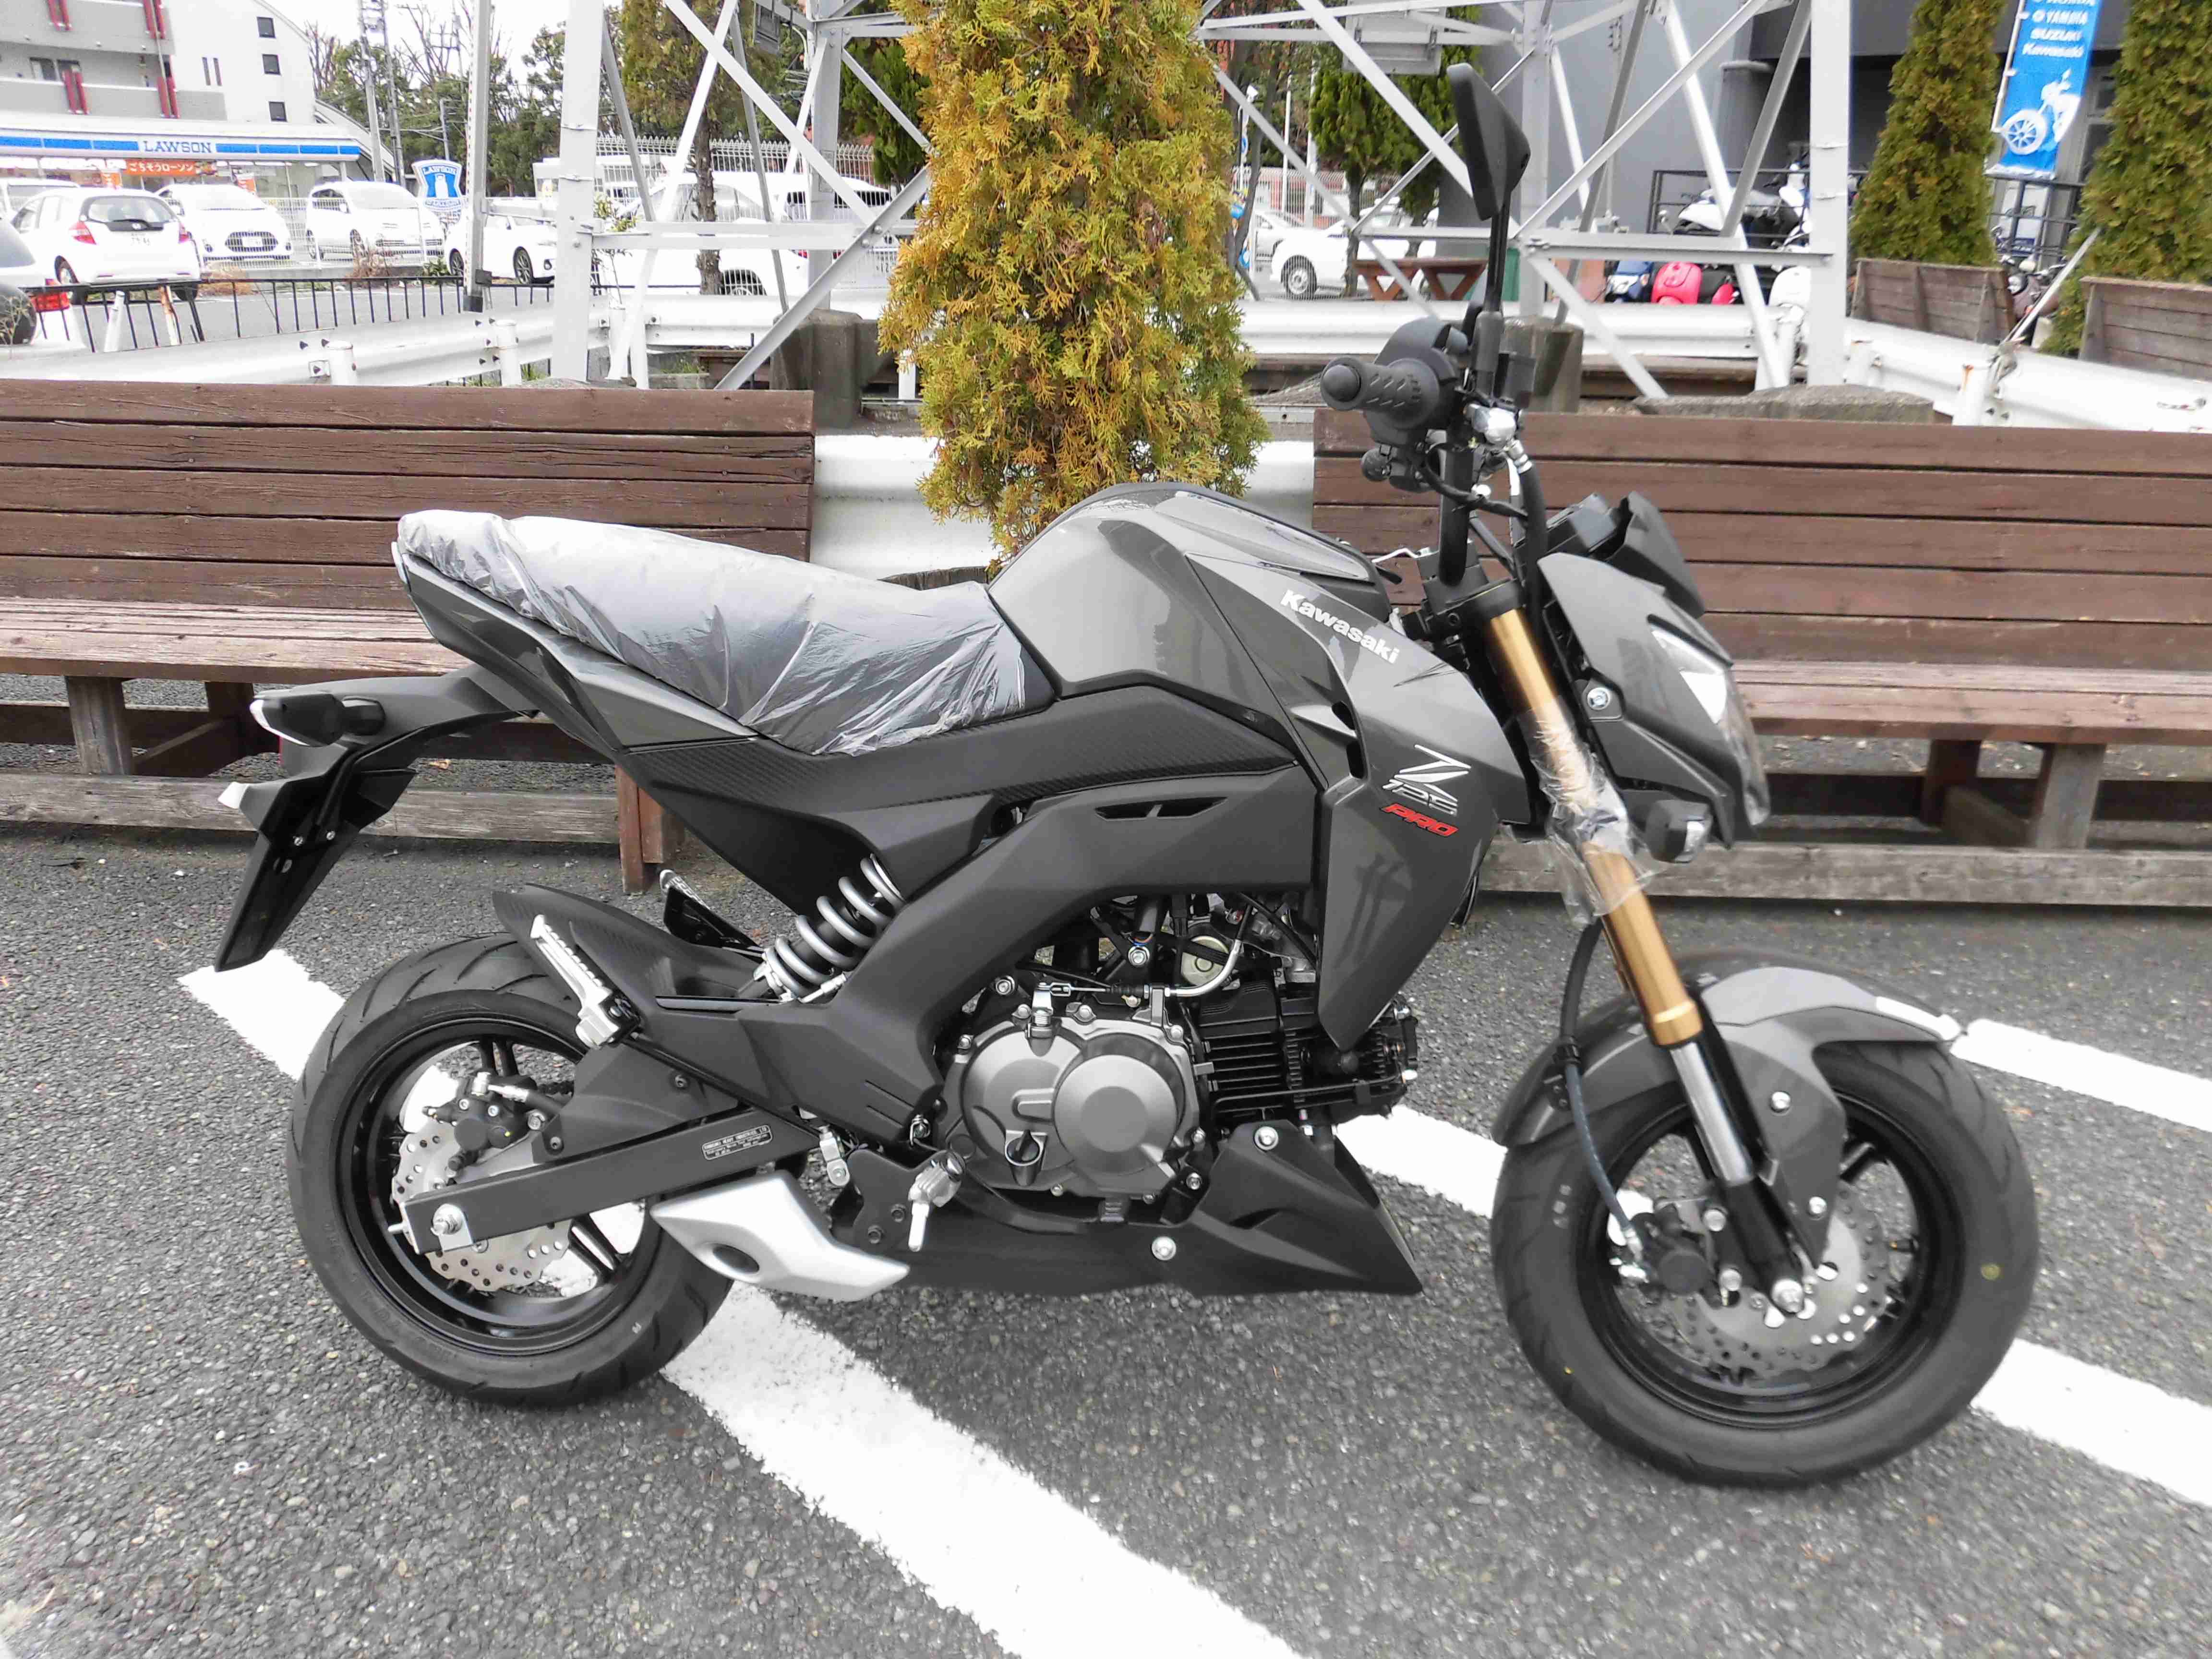 50cc 125ccマニュアルバイク新車もございます 最新情報 U Media ユーメディア 中古バイク 新車バイク探しの決定版 神奈川 東京でバイク探すならユーメディア